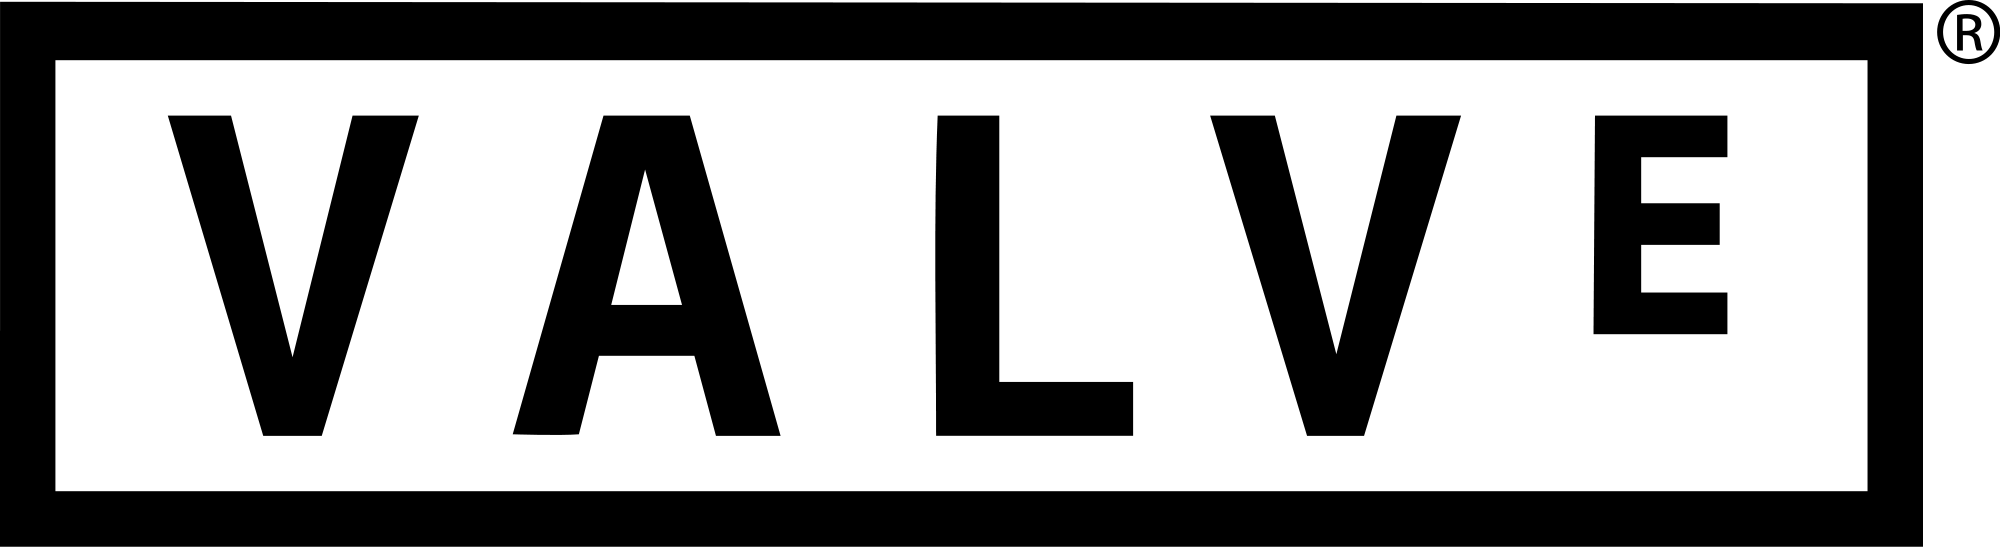 Valve Logo - Valve Logo Png (800x219), Png Download